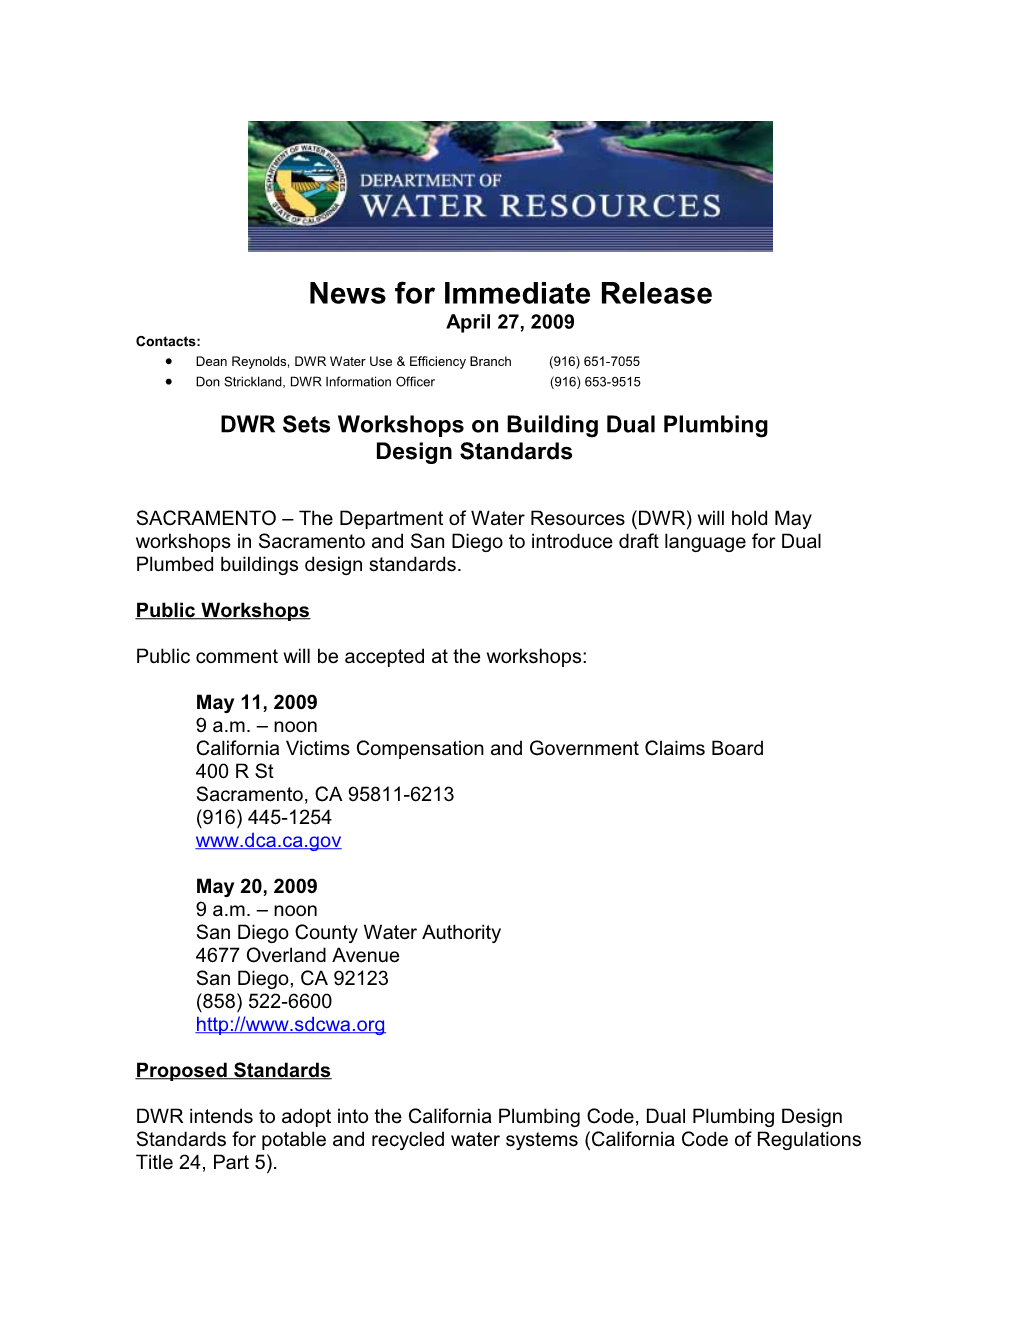 Dean Reynolds, DWR Water Use & Efficiency Branch (916) 651-7055